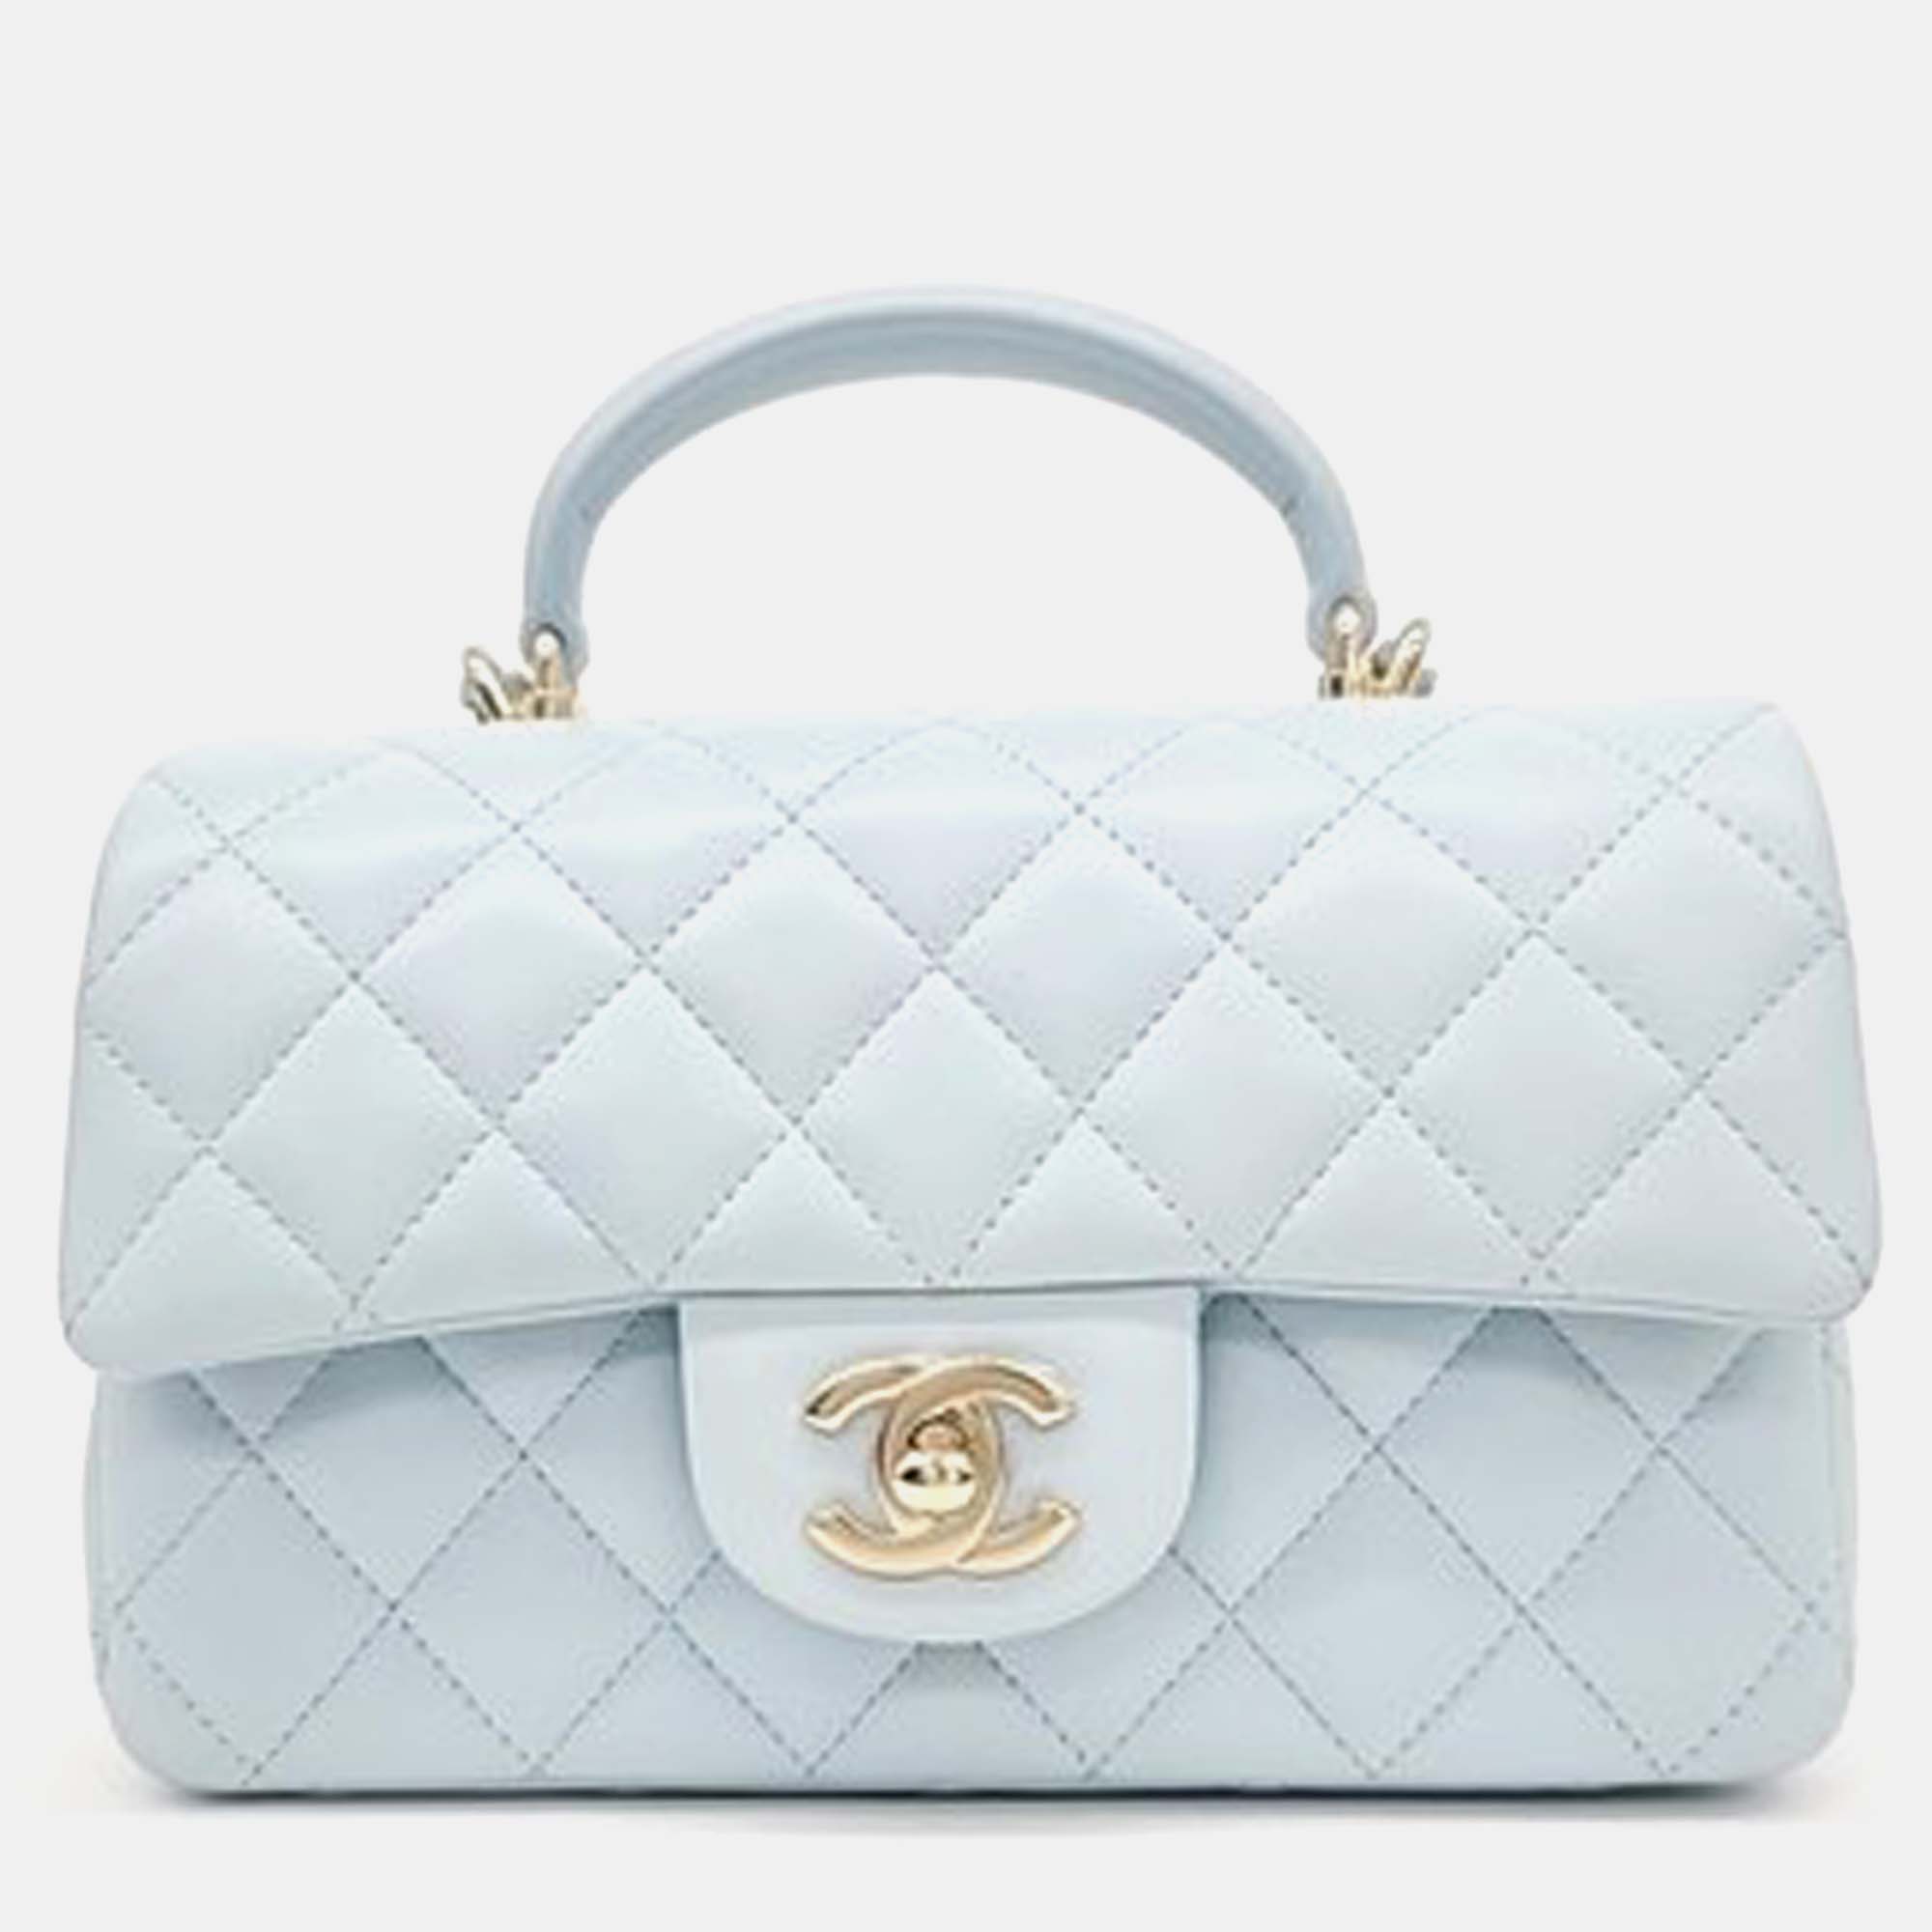 Chanel white lambskin leather mini top handle crossbody bag